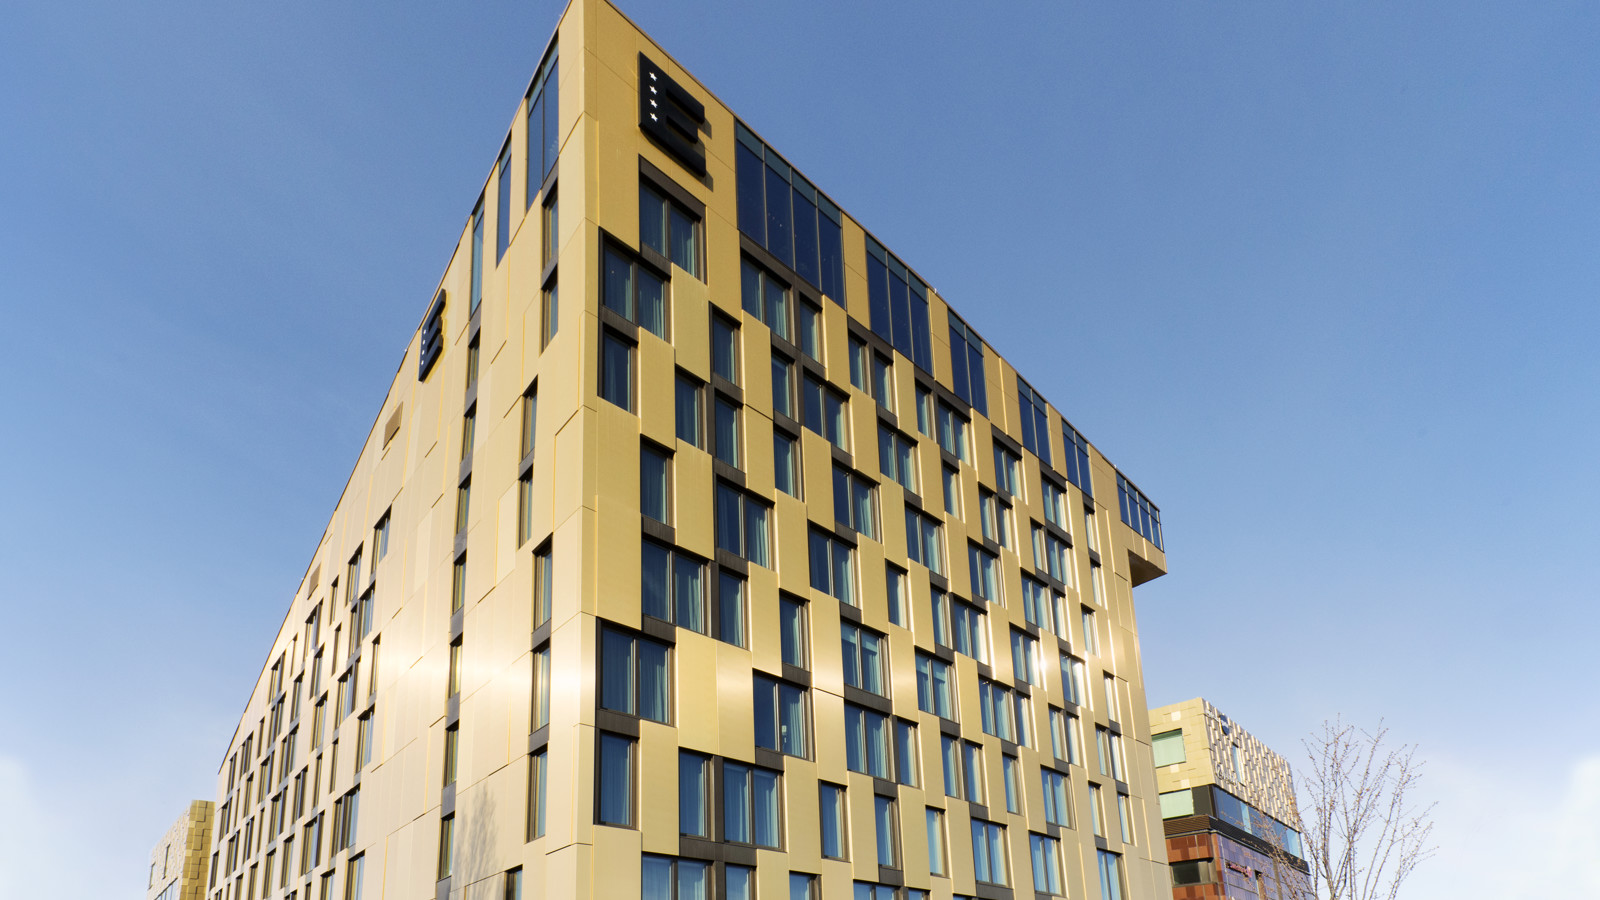 Yellow facade of Elite Hotel Academia with many windows